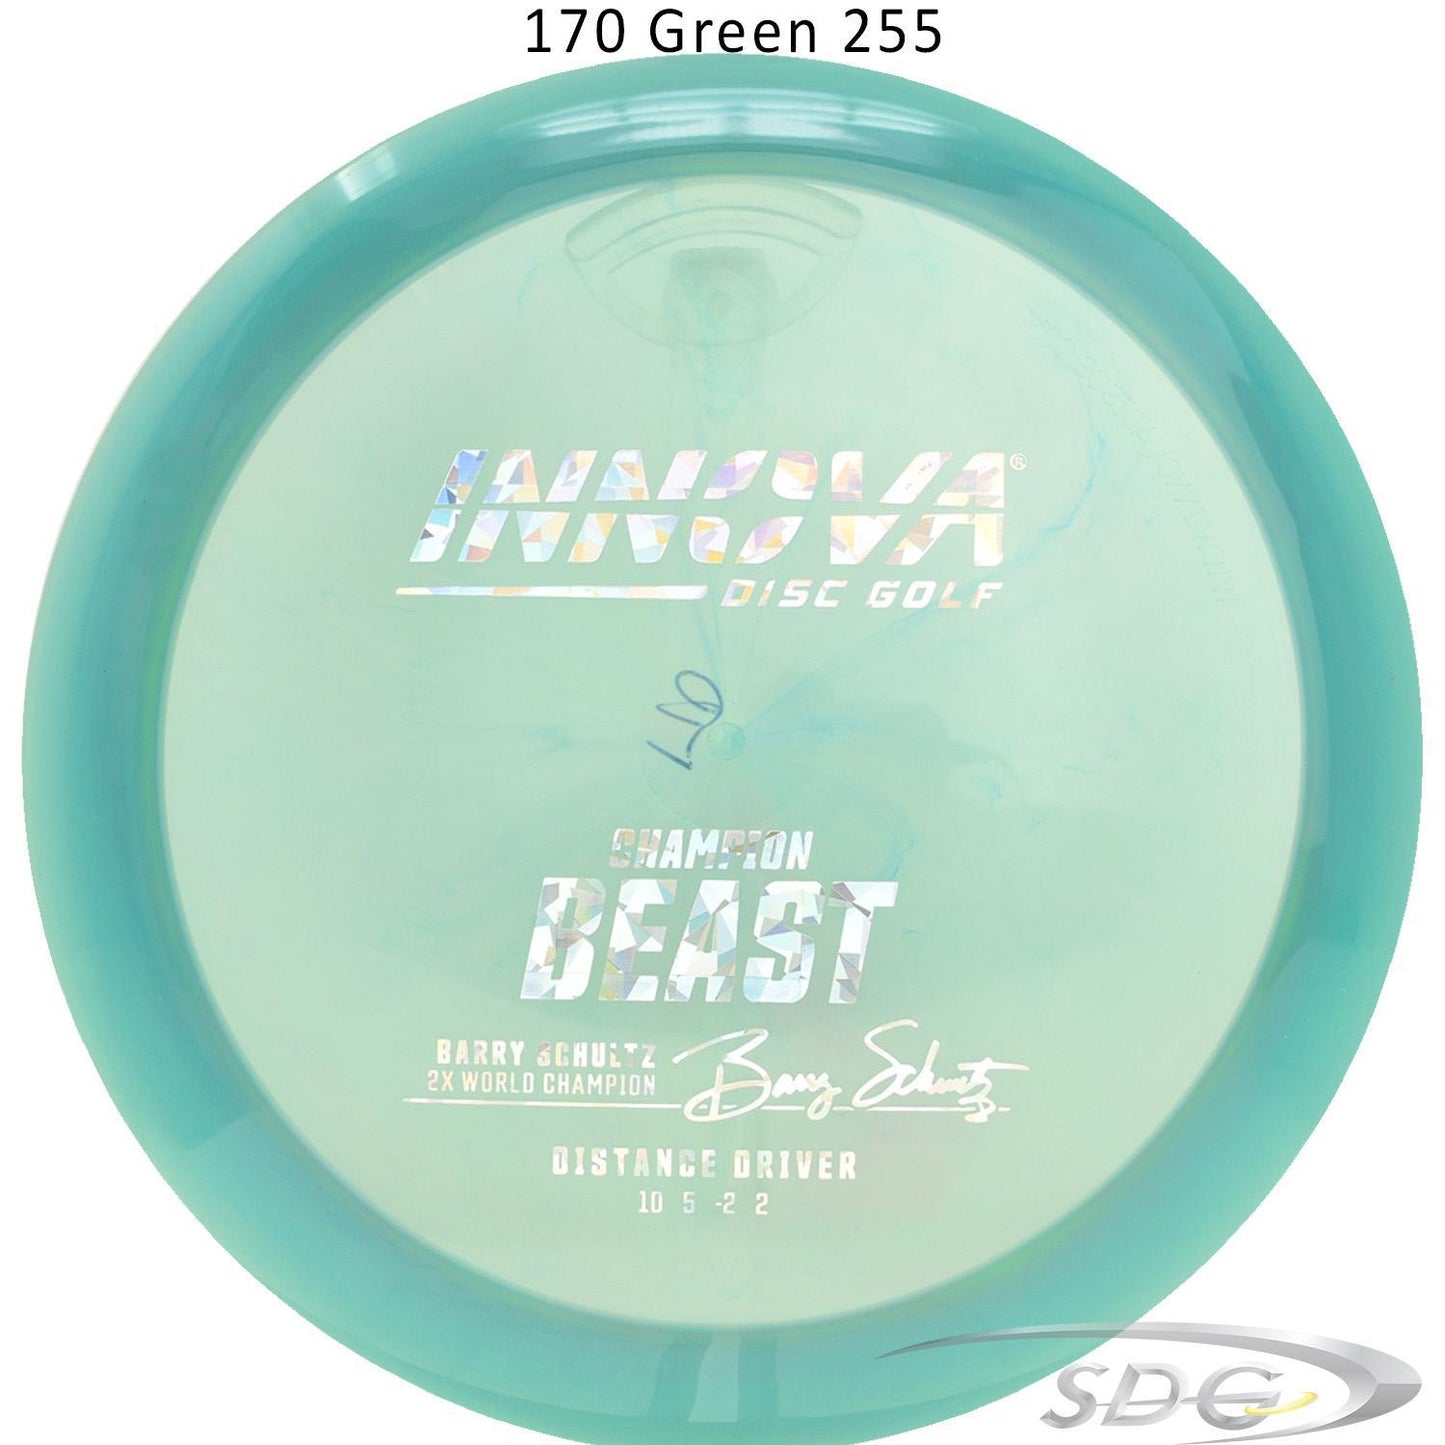 innova-champion-beast-disc-golf-distance-driver 170 Green 255